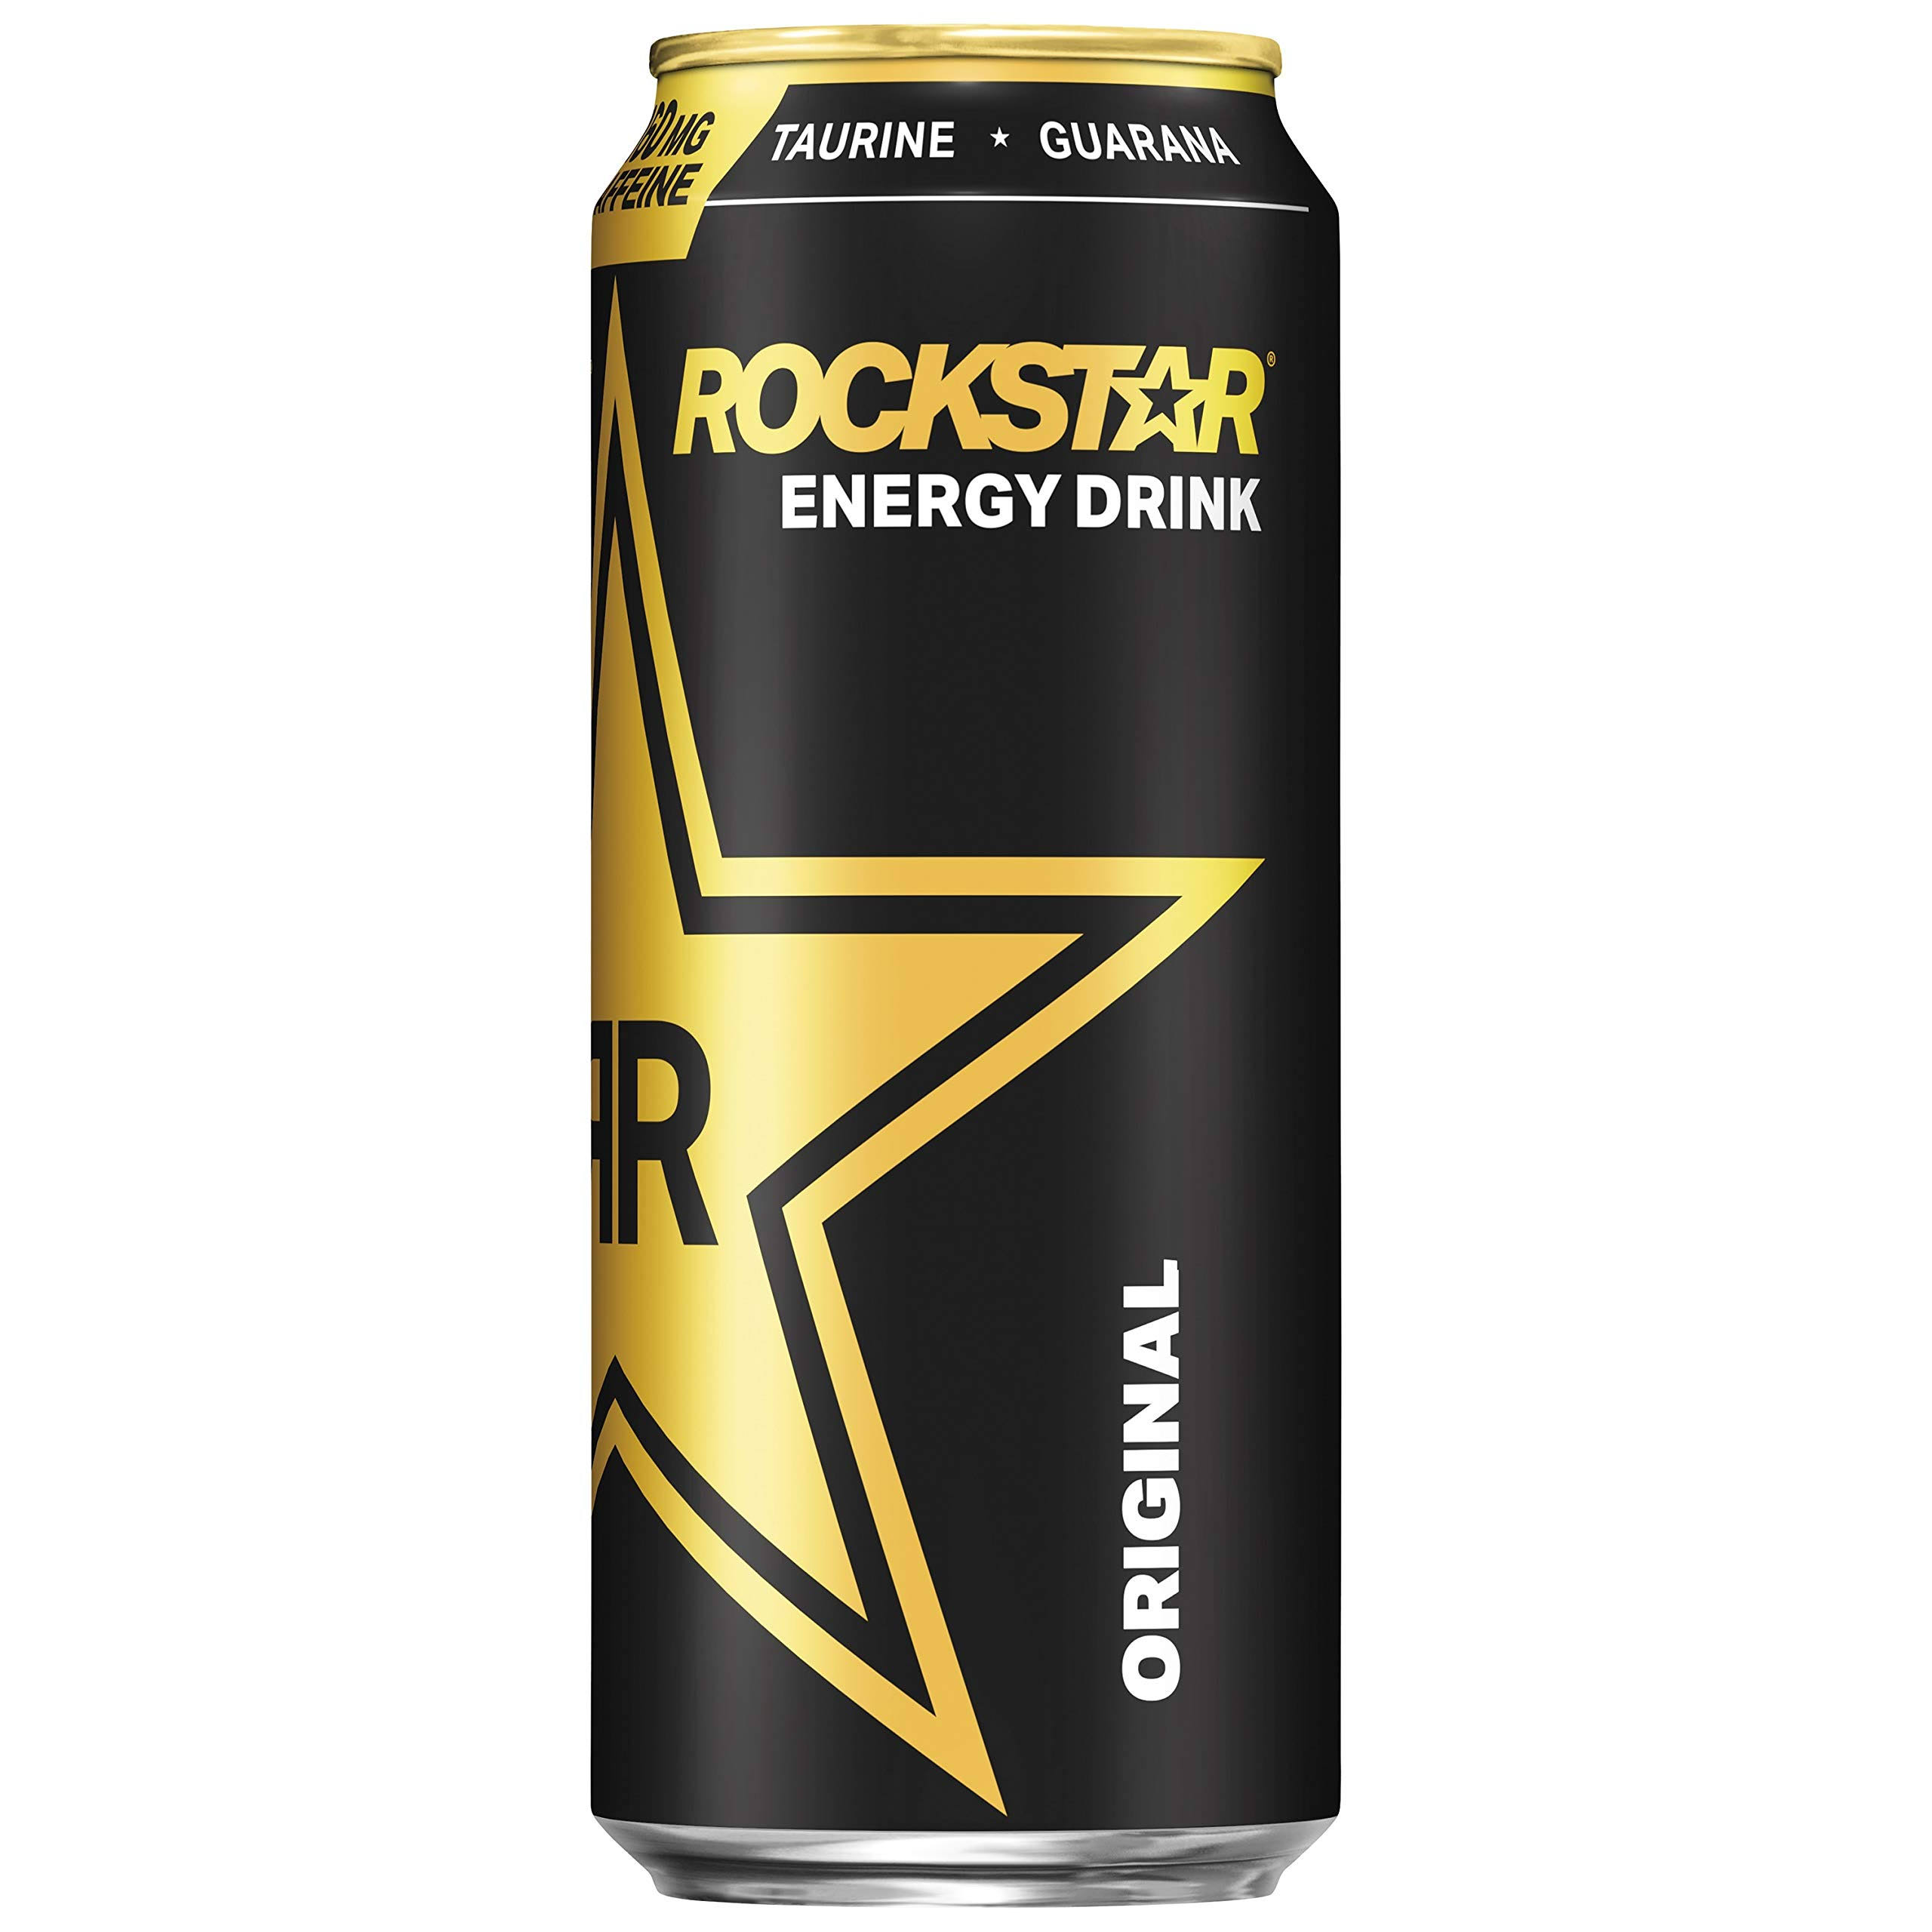 Rockstar Energy Drink, Original - 16 fl oz